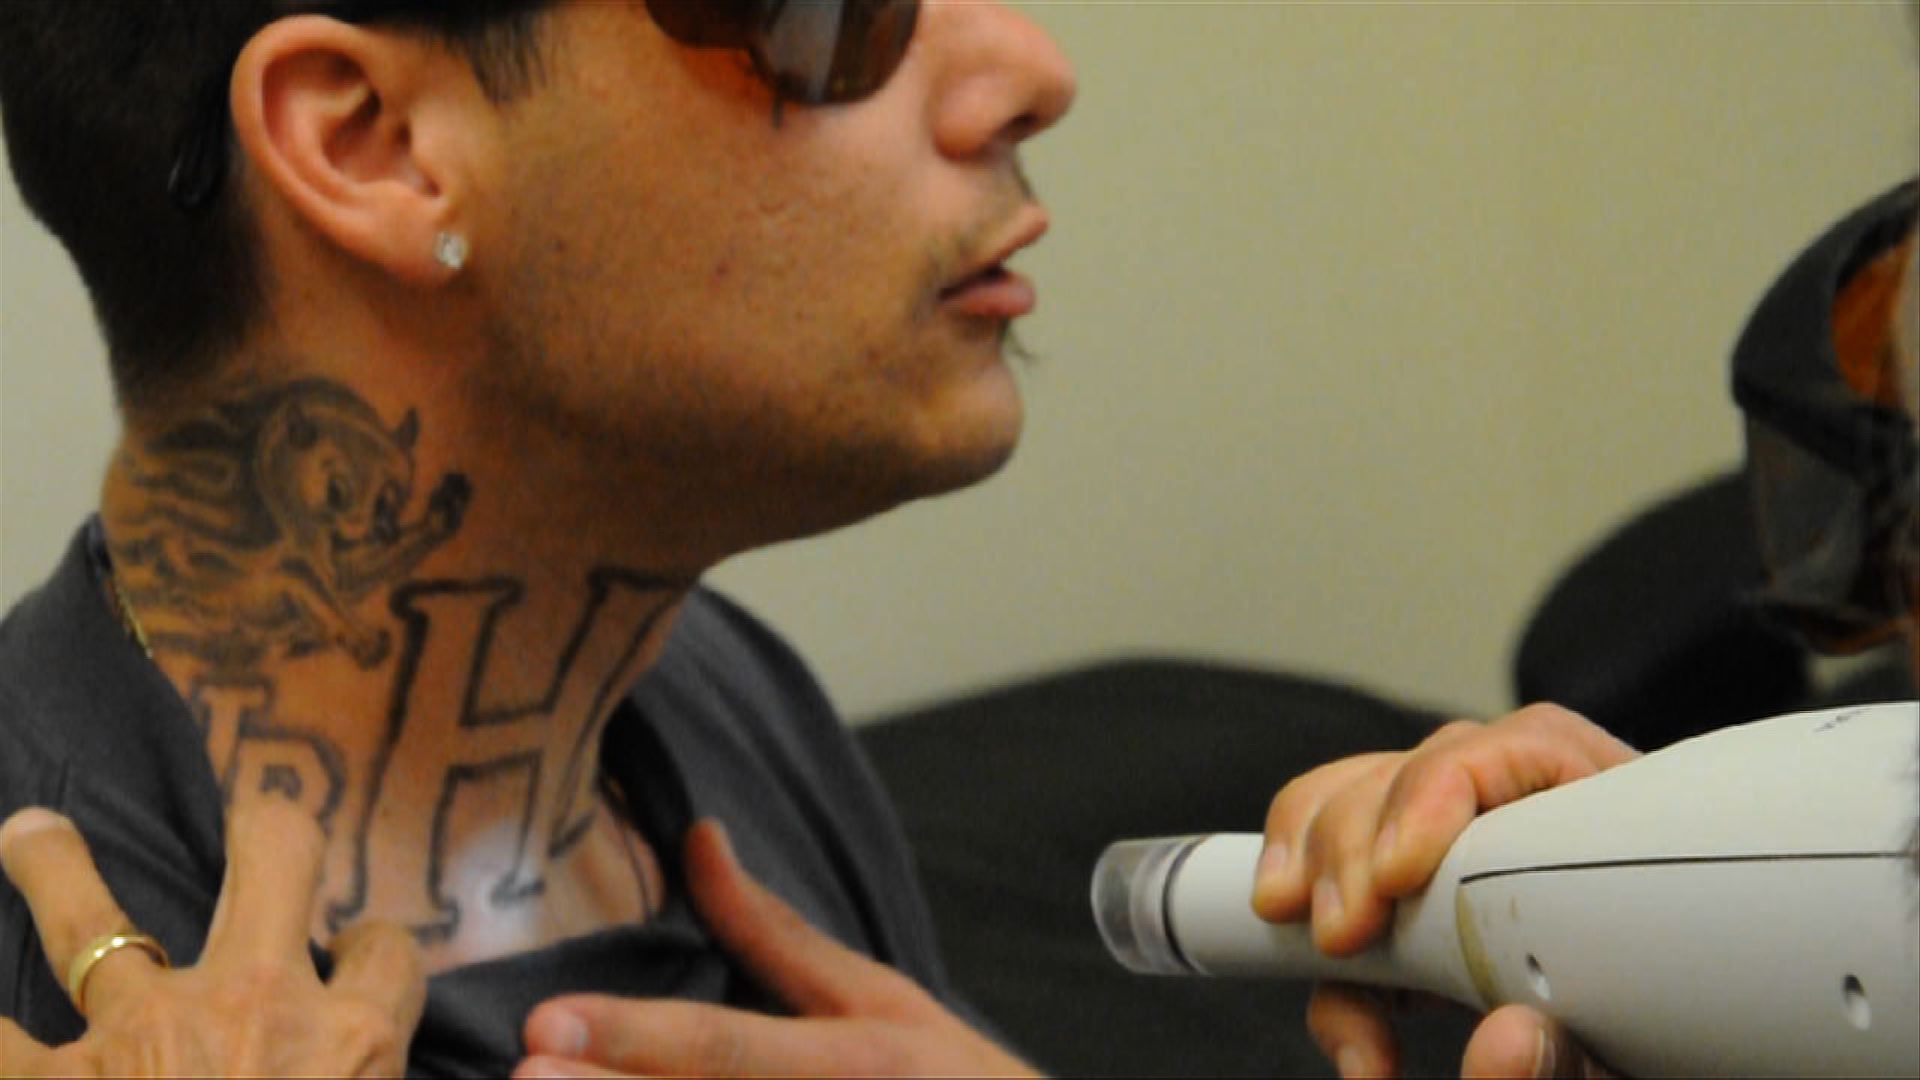 Gang Tattoos & Symbols | What Gang Tattoos Mean?